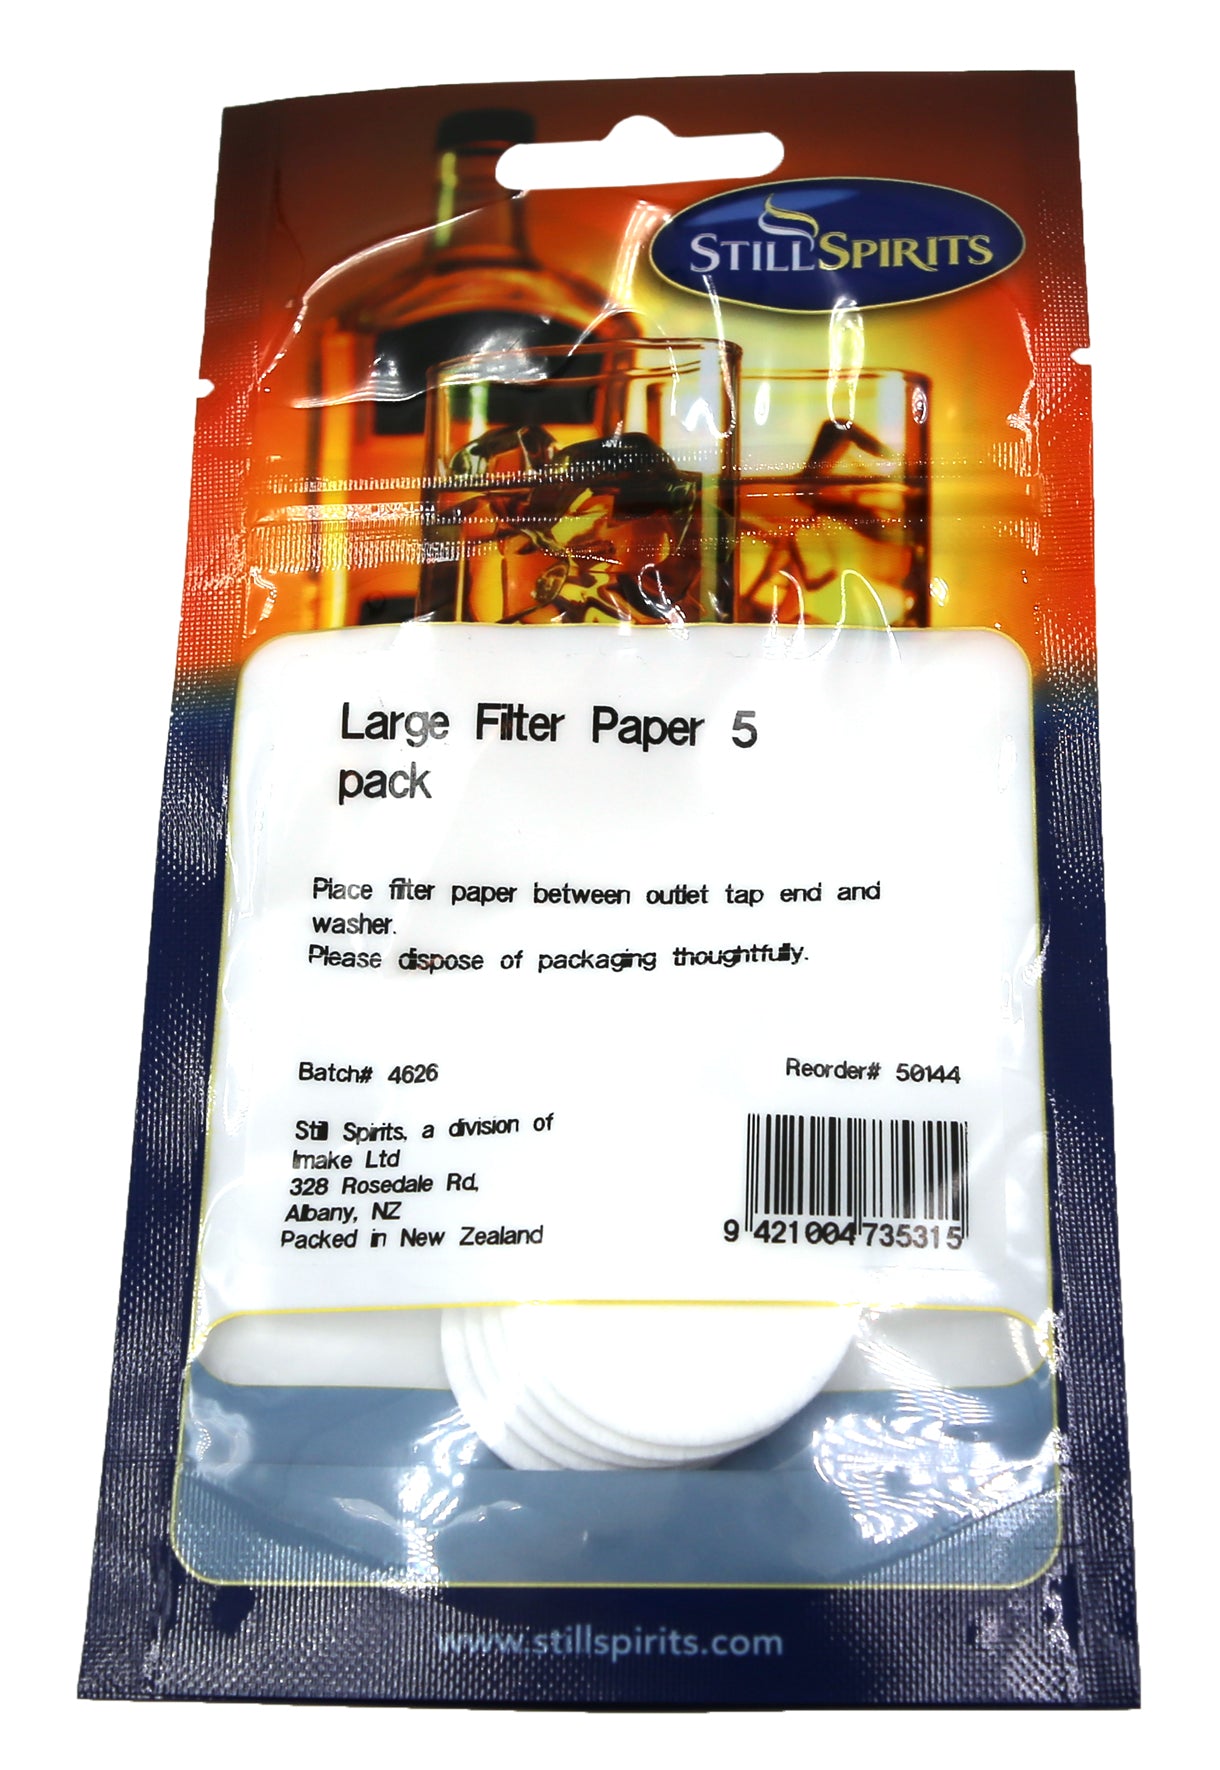 Still Spirits Large Filter Paper - 5 pack - All Things Fermented | Home Brew Shop NZ | Supplies | Equipment